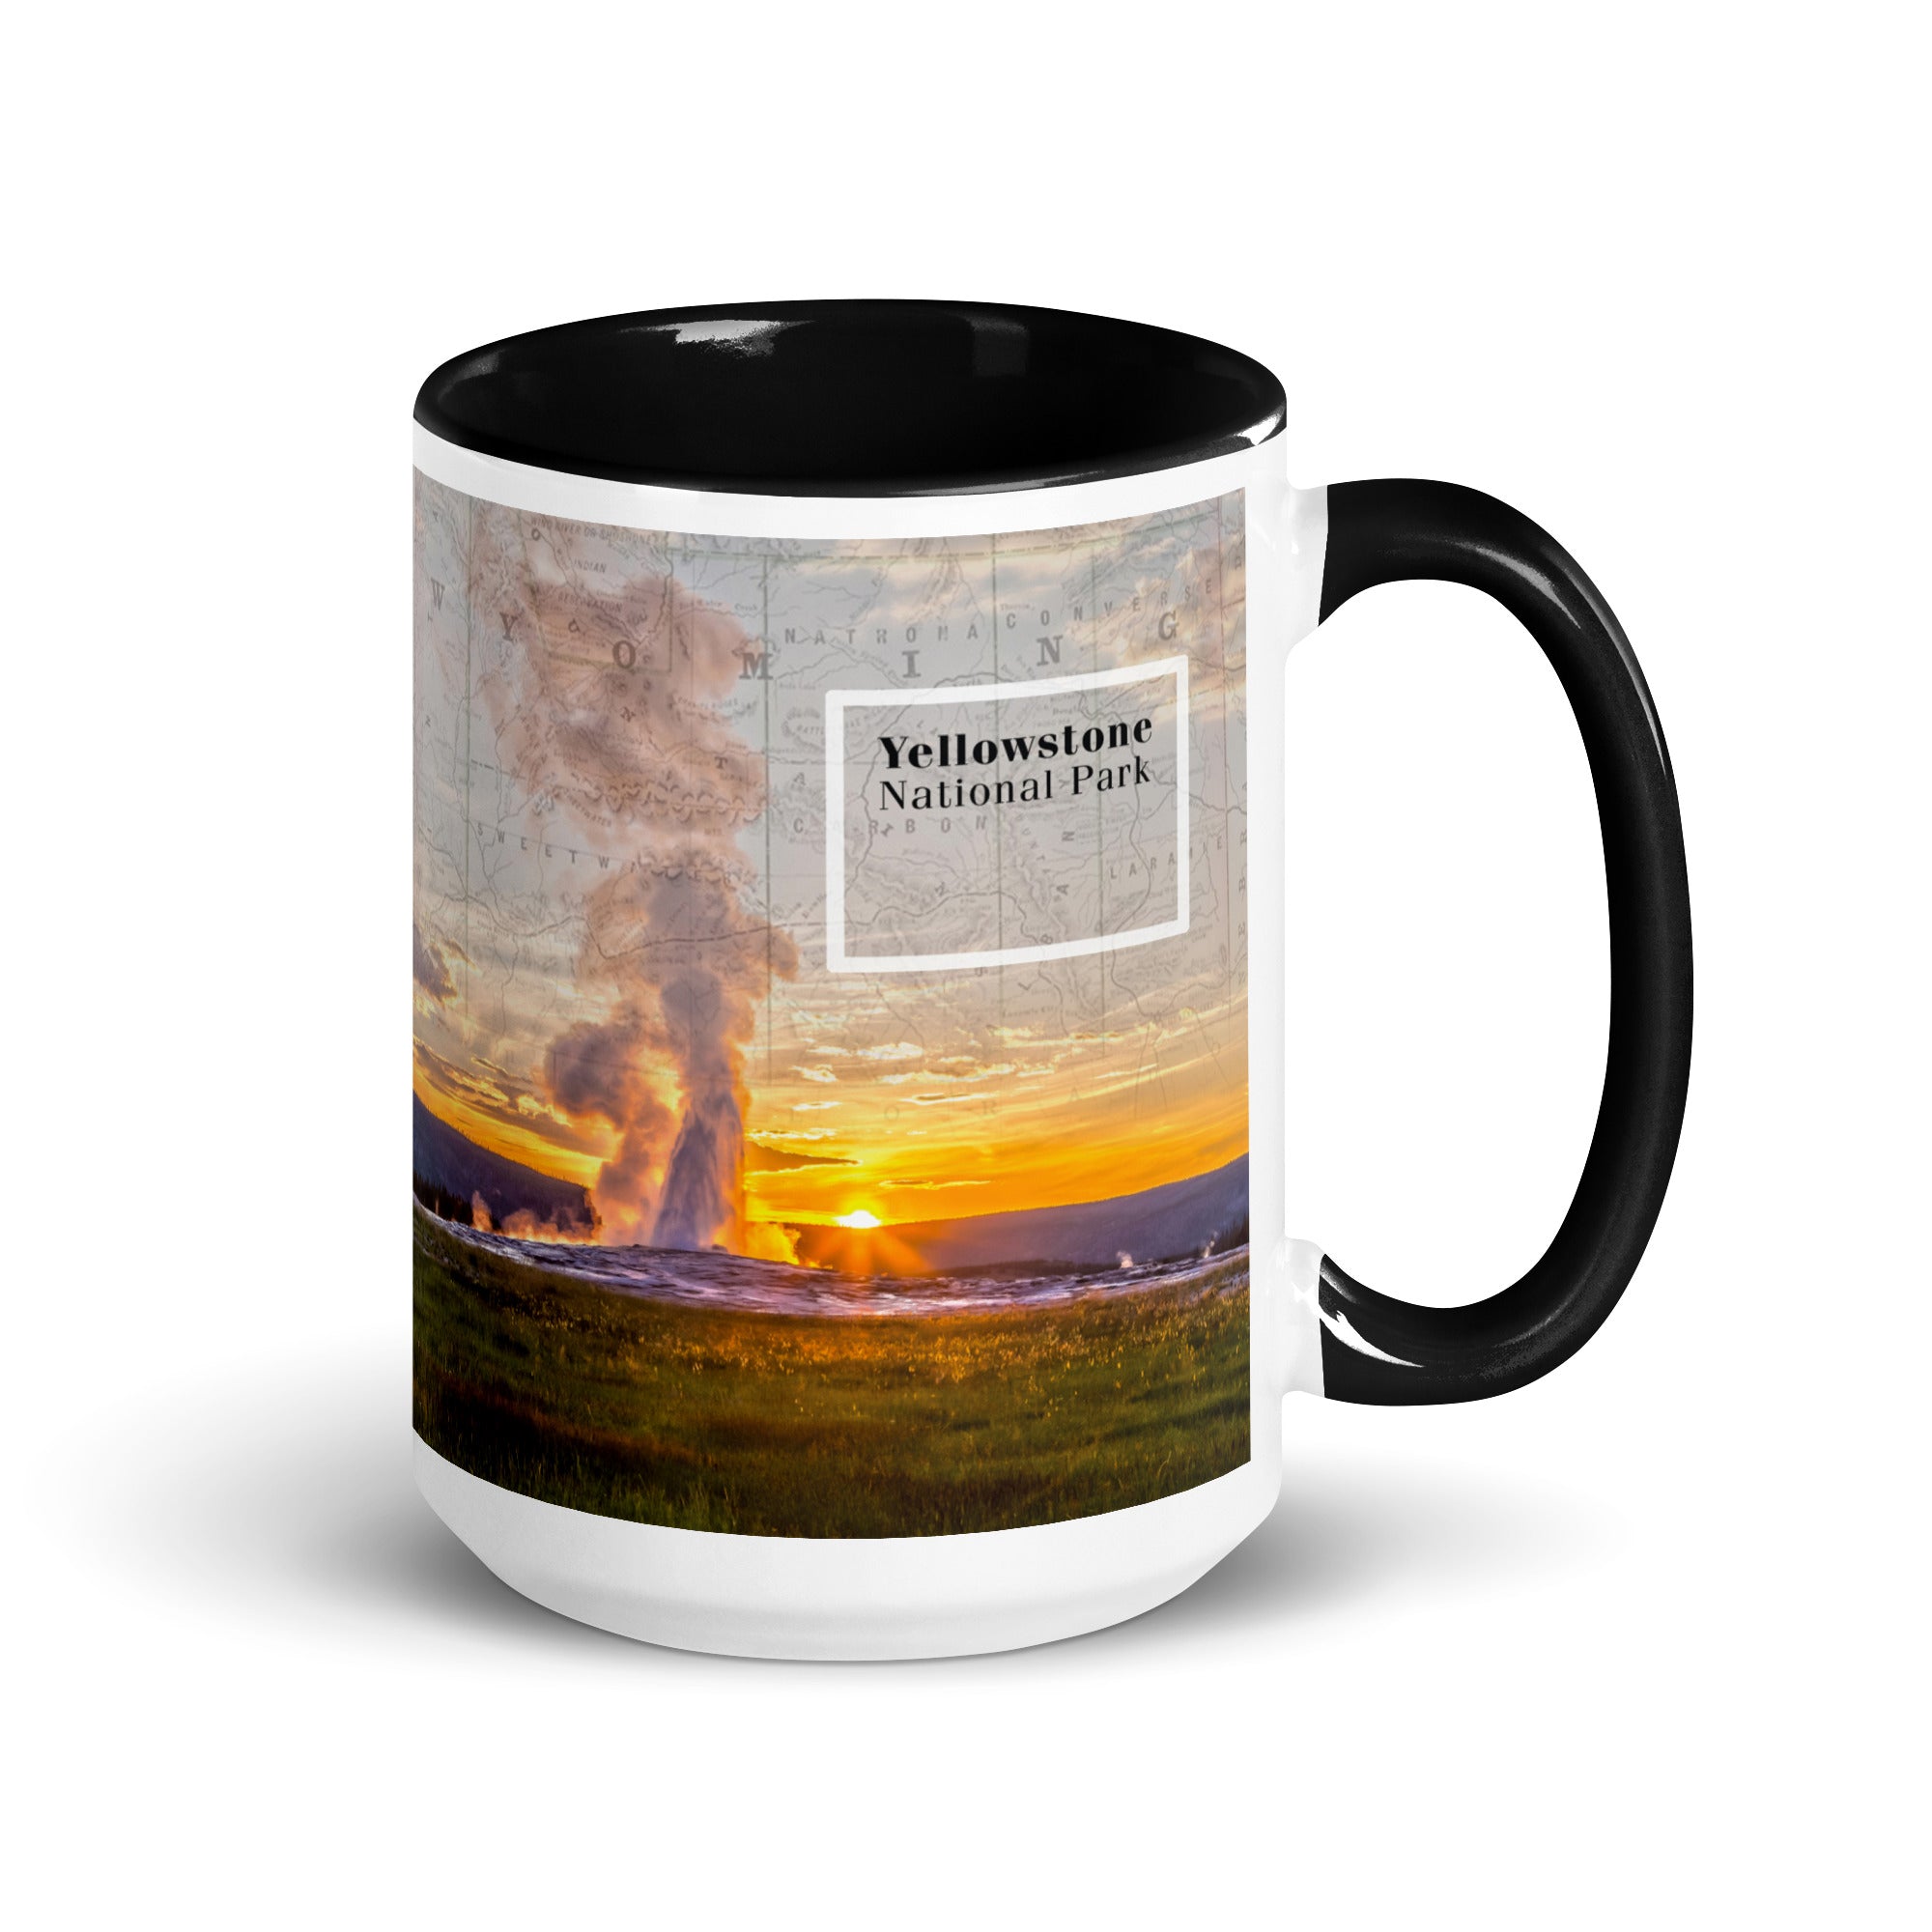 Yellowstone National Park Mug with Black Inside